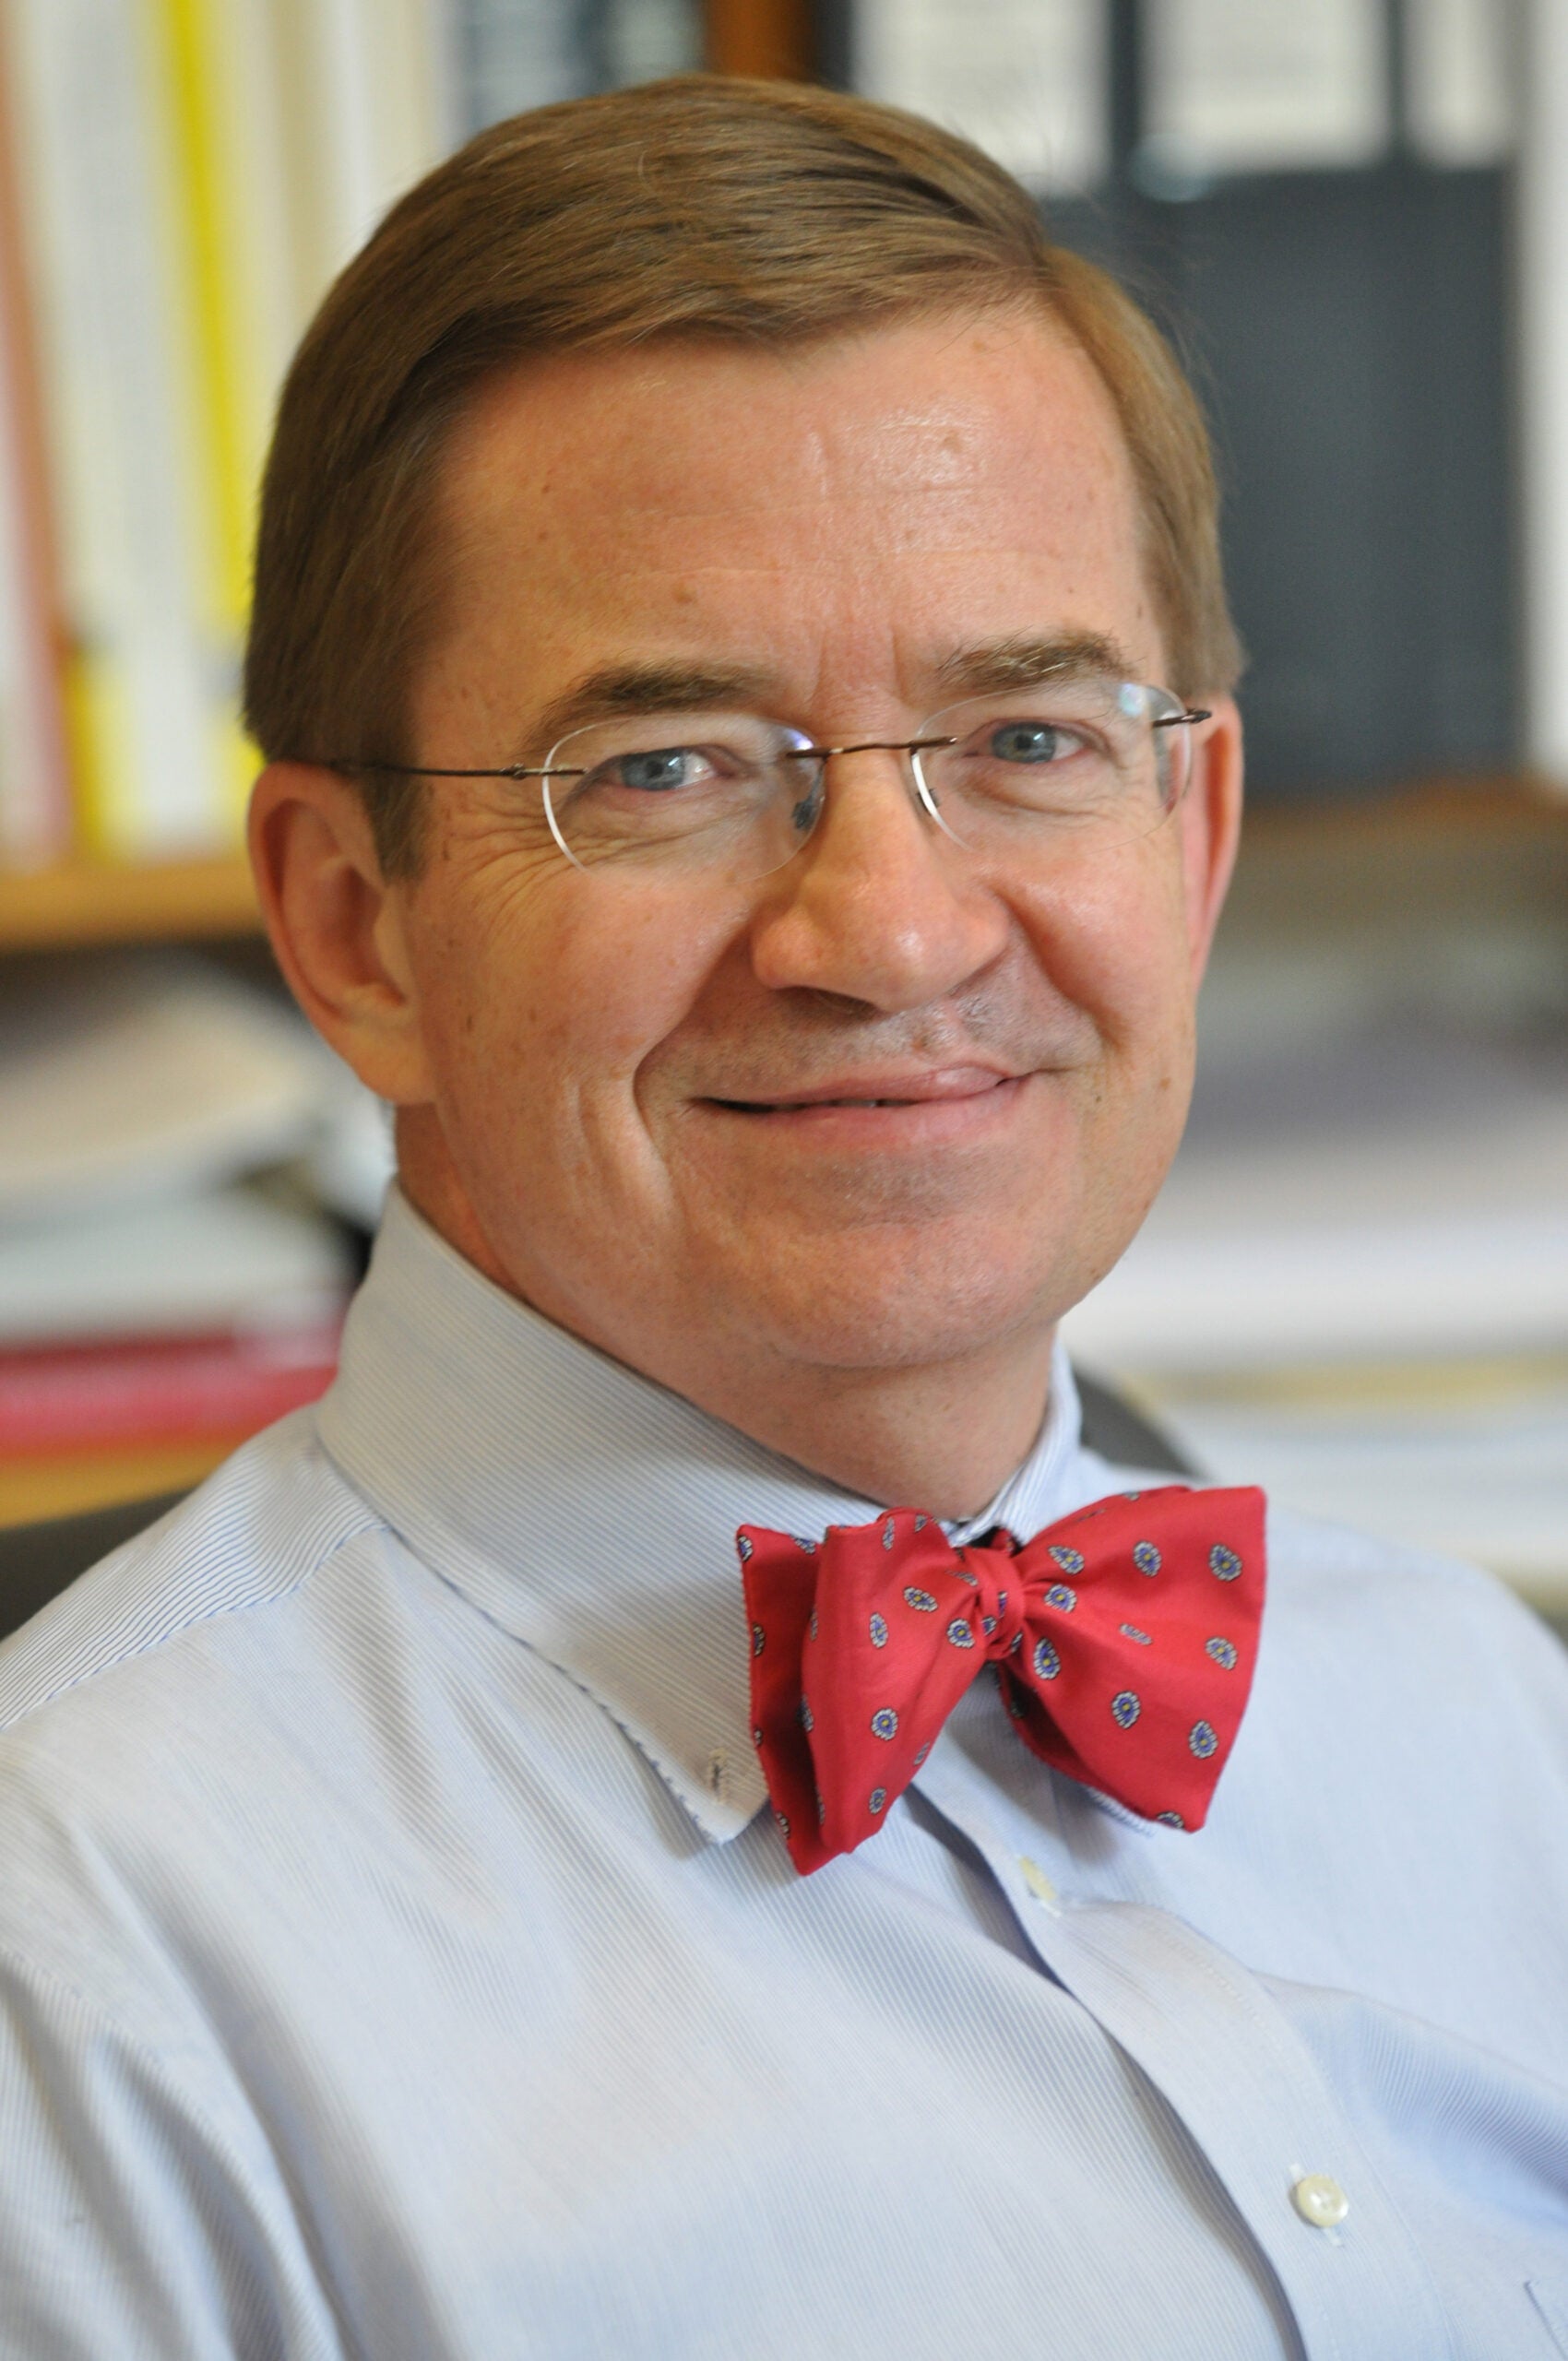 Professor Stephen E. Shay